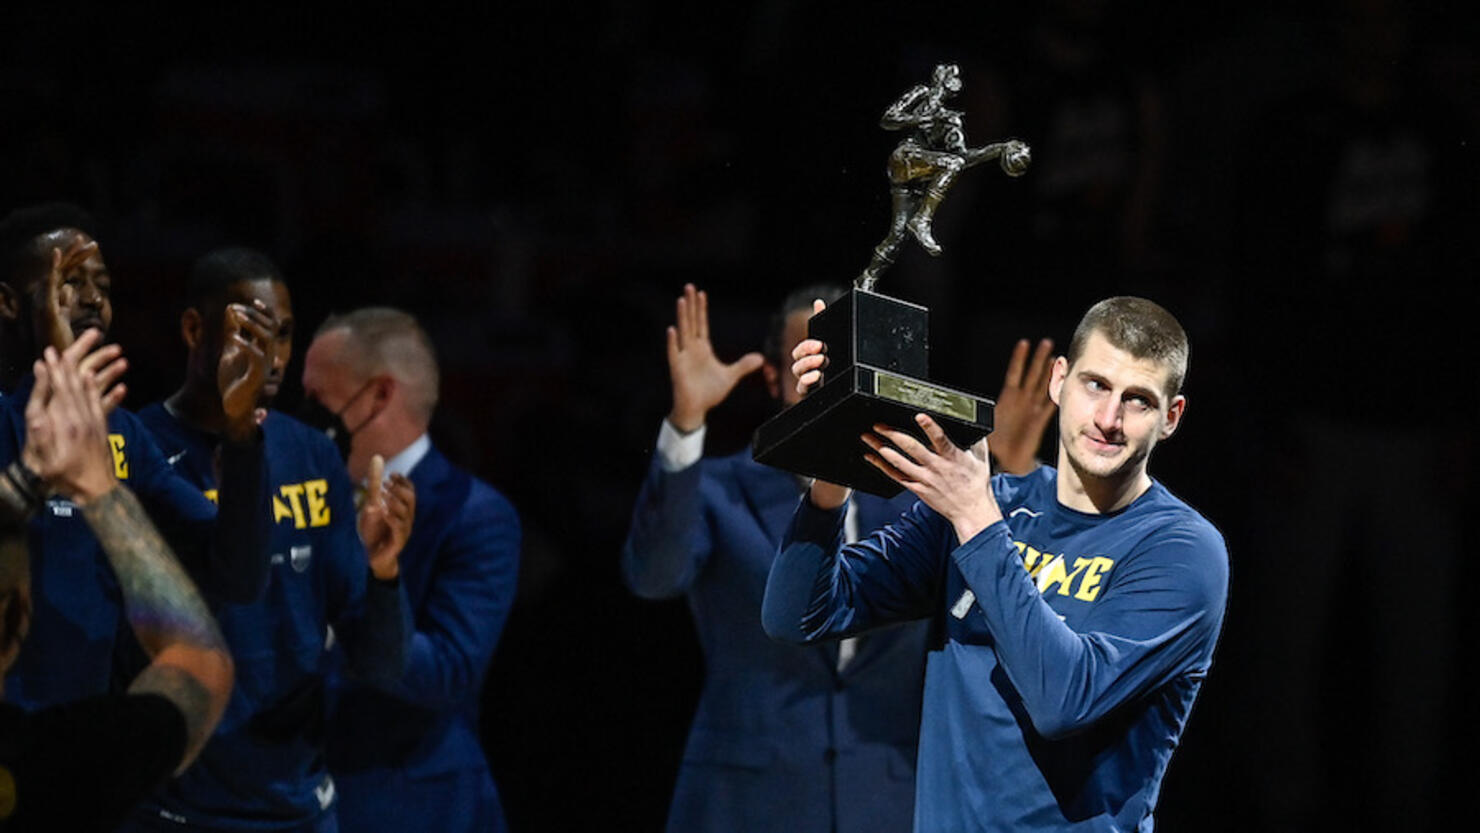 Denver Nuggets' Nikola Jokić for NBA MVP